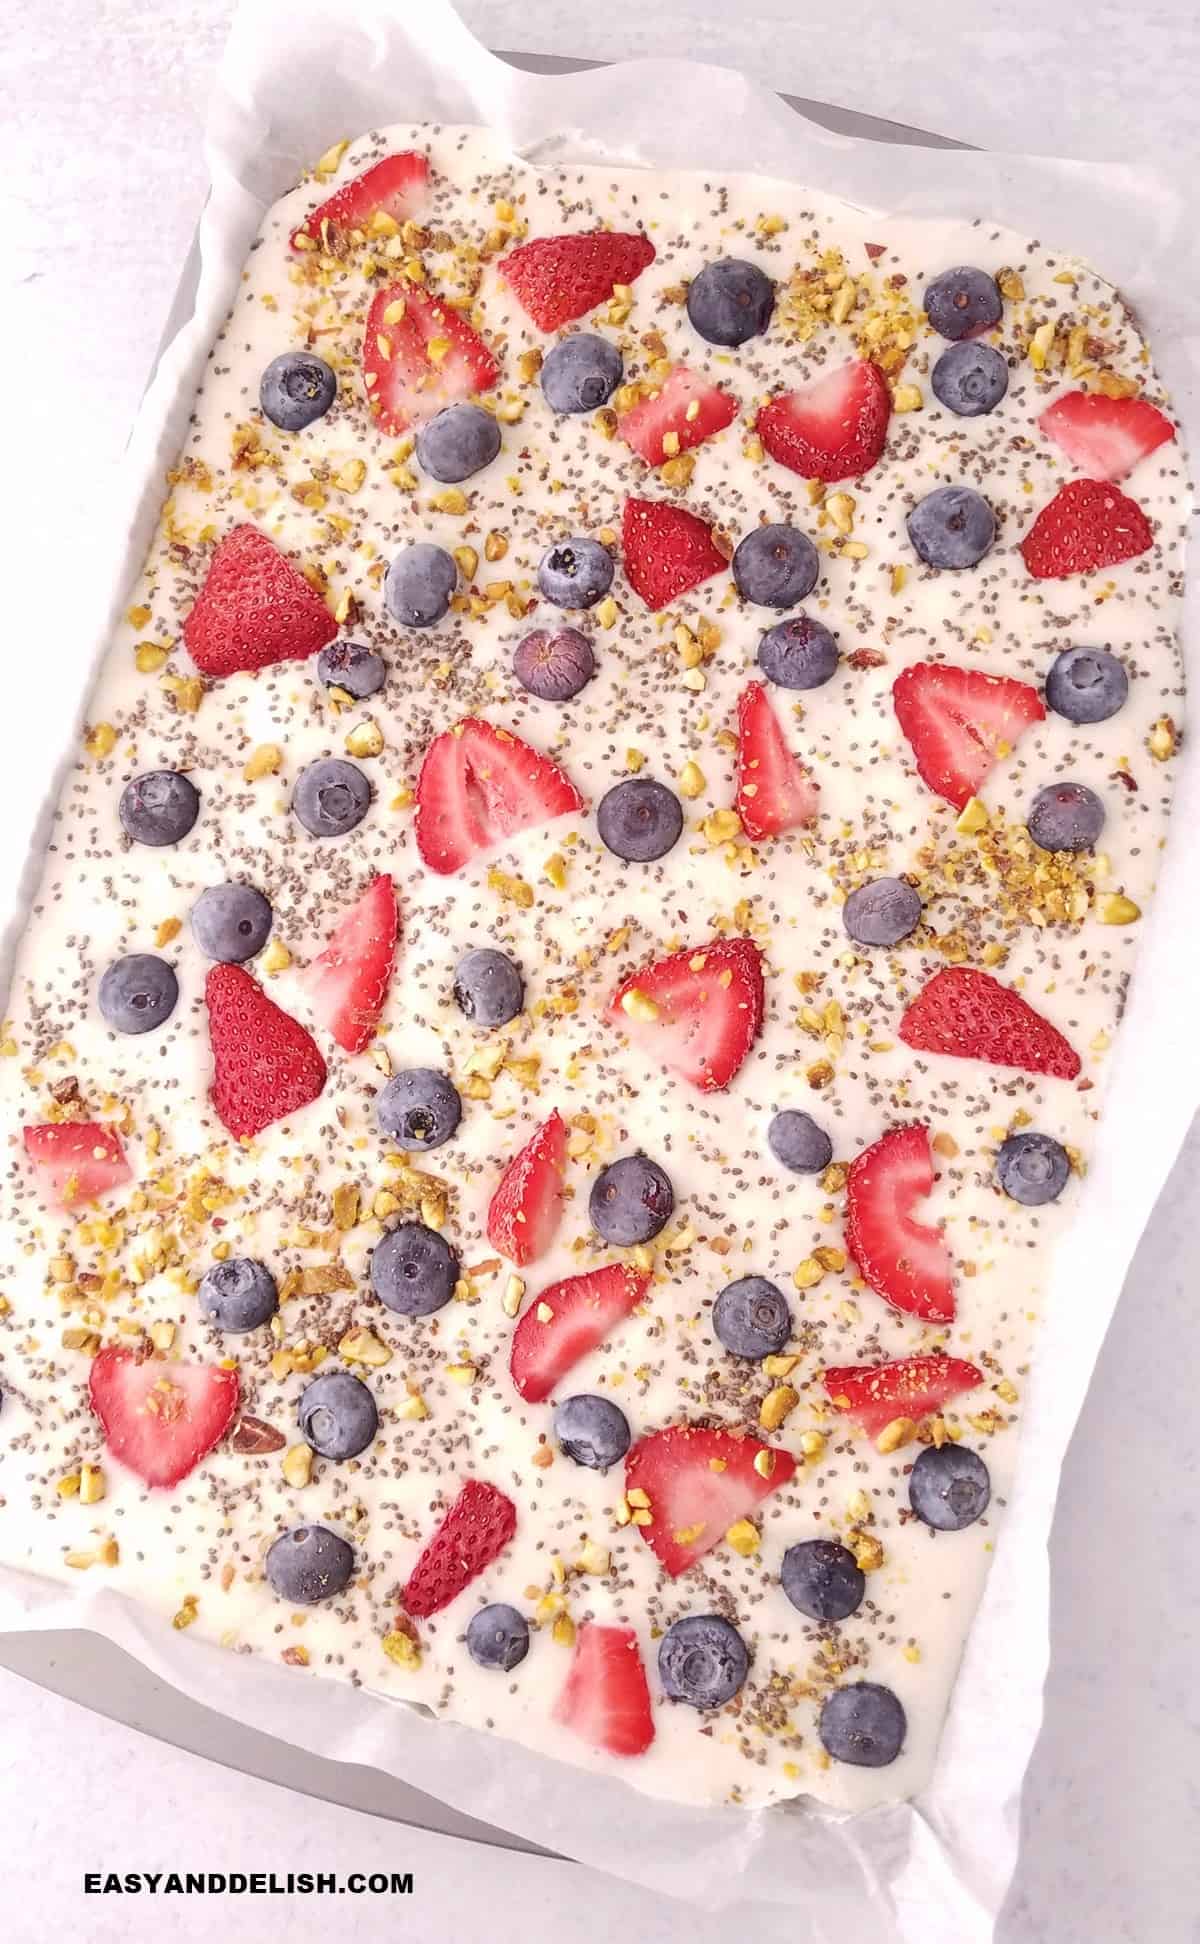 whole frozen yogurt bark with berries in a baking sheet. 